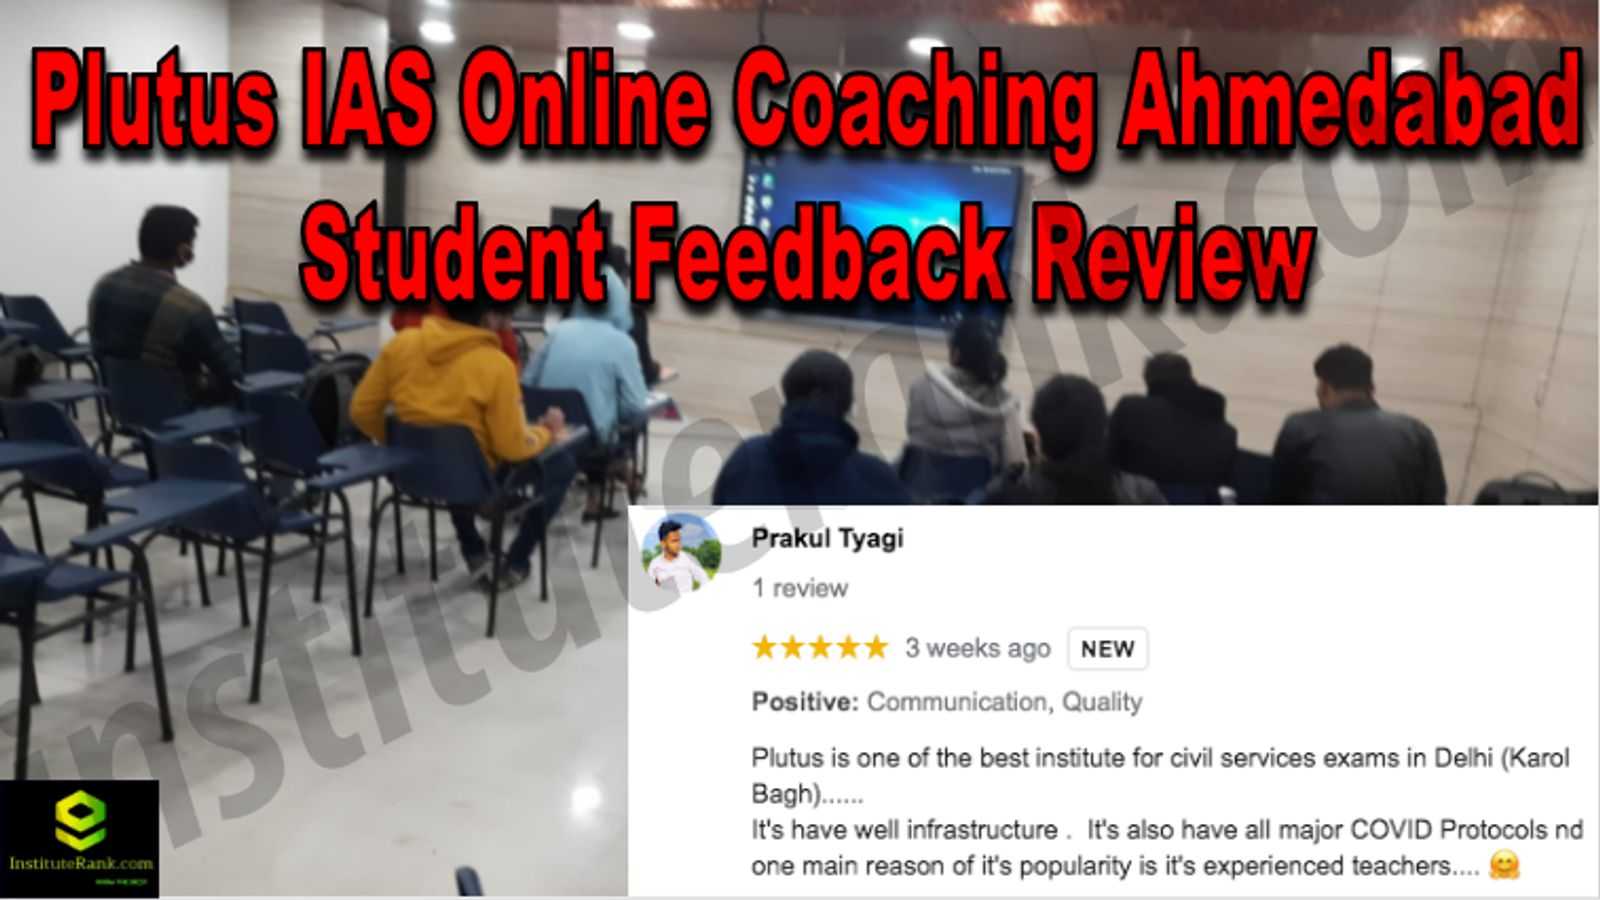 Plutus IAS Online Coaching Ahmedabad Student Feedback Reviews